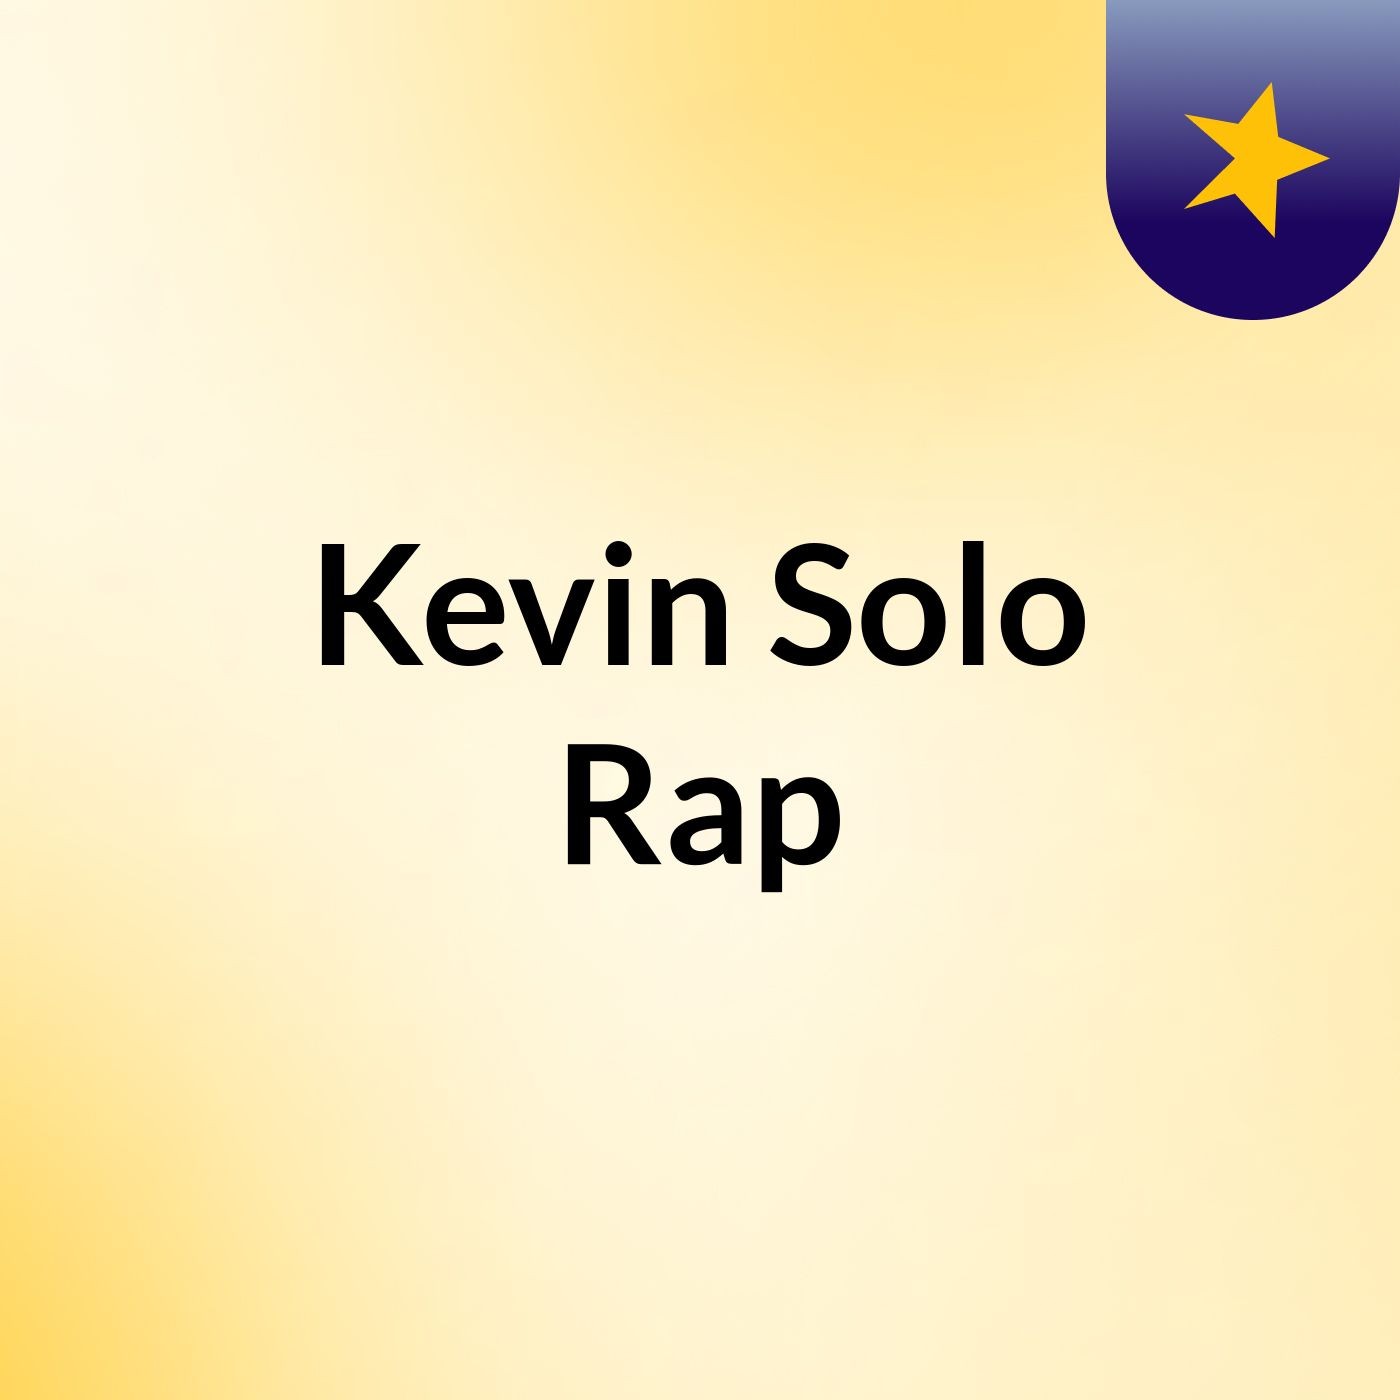 Kevin Solo Rap